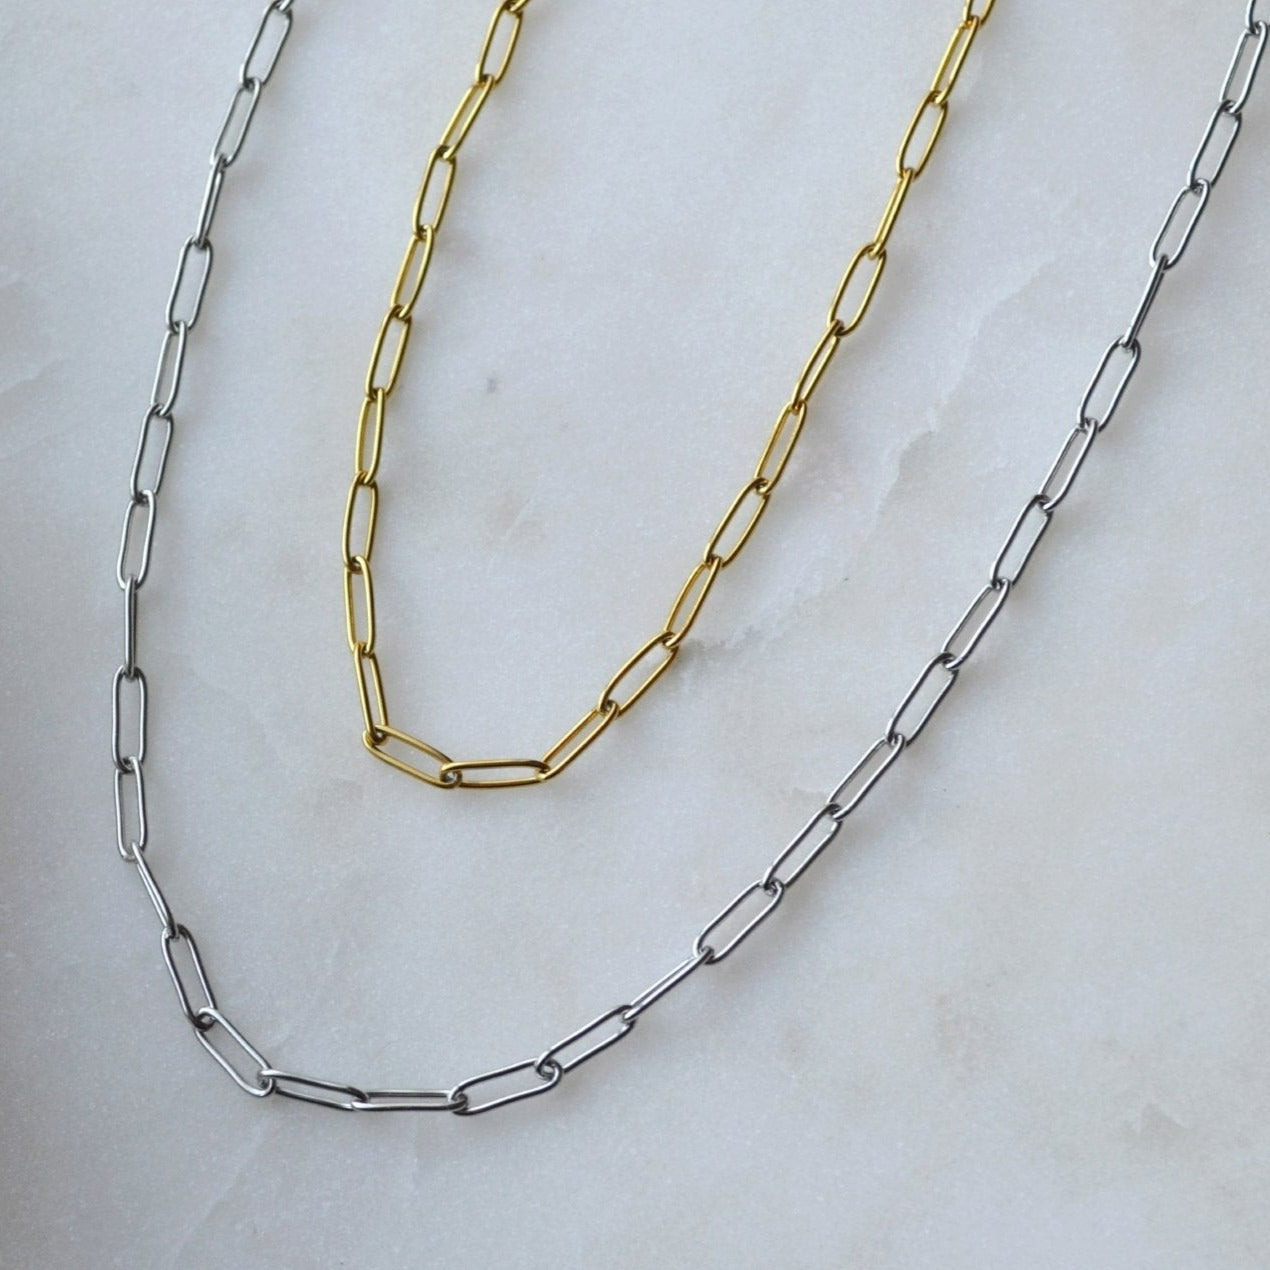 Men's Necklaces & Chains: Silver & Gold Chains